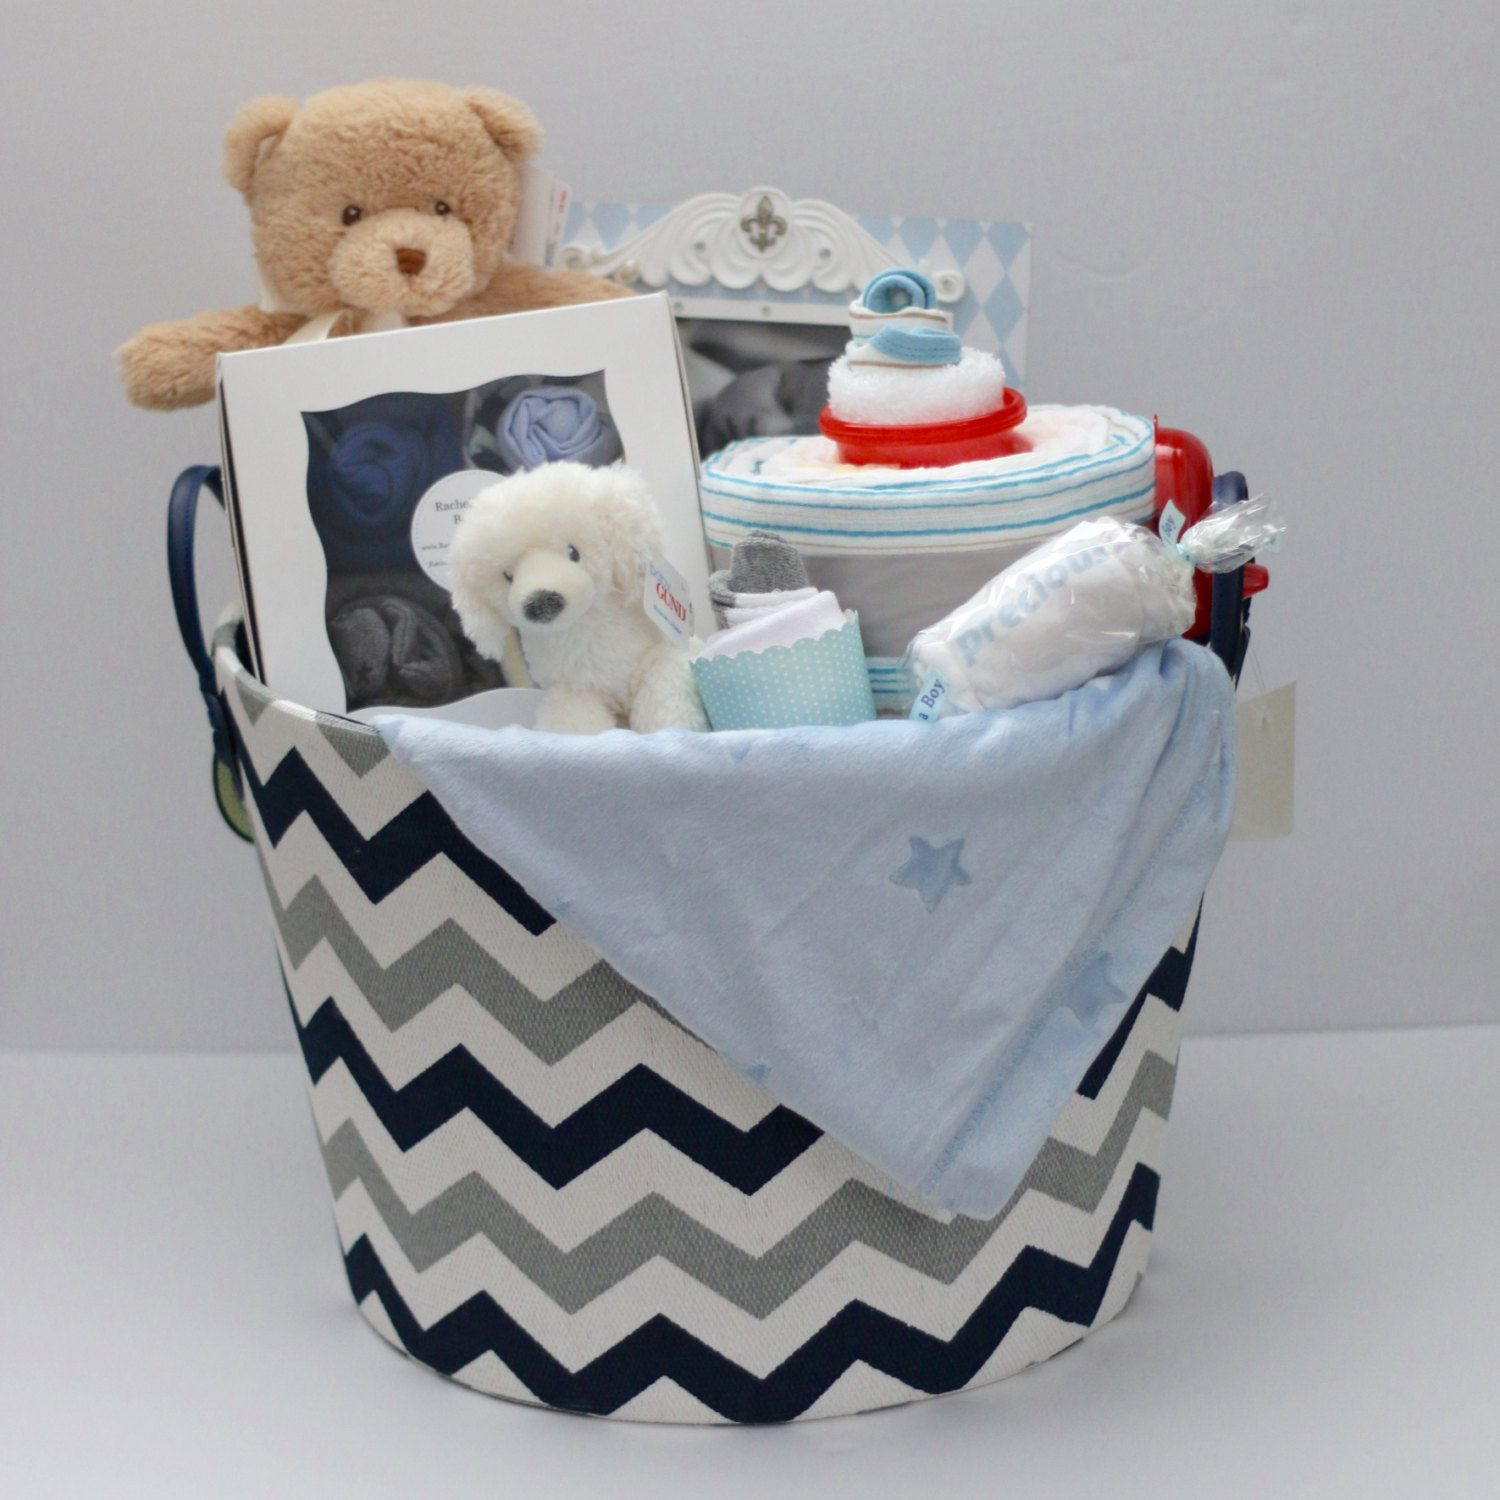 Best ideas about Gift Ideas For Newborn Boy
. Save or Pin Baby Boy Gift Basket Baby Shower Gift Newborn Gift Now.